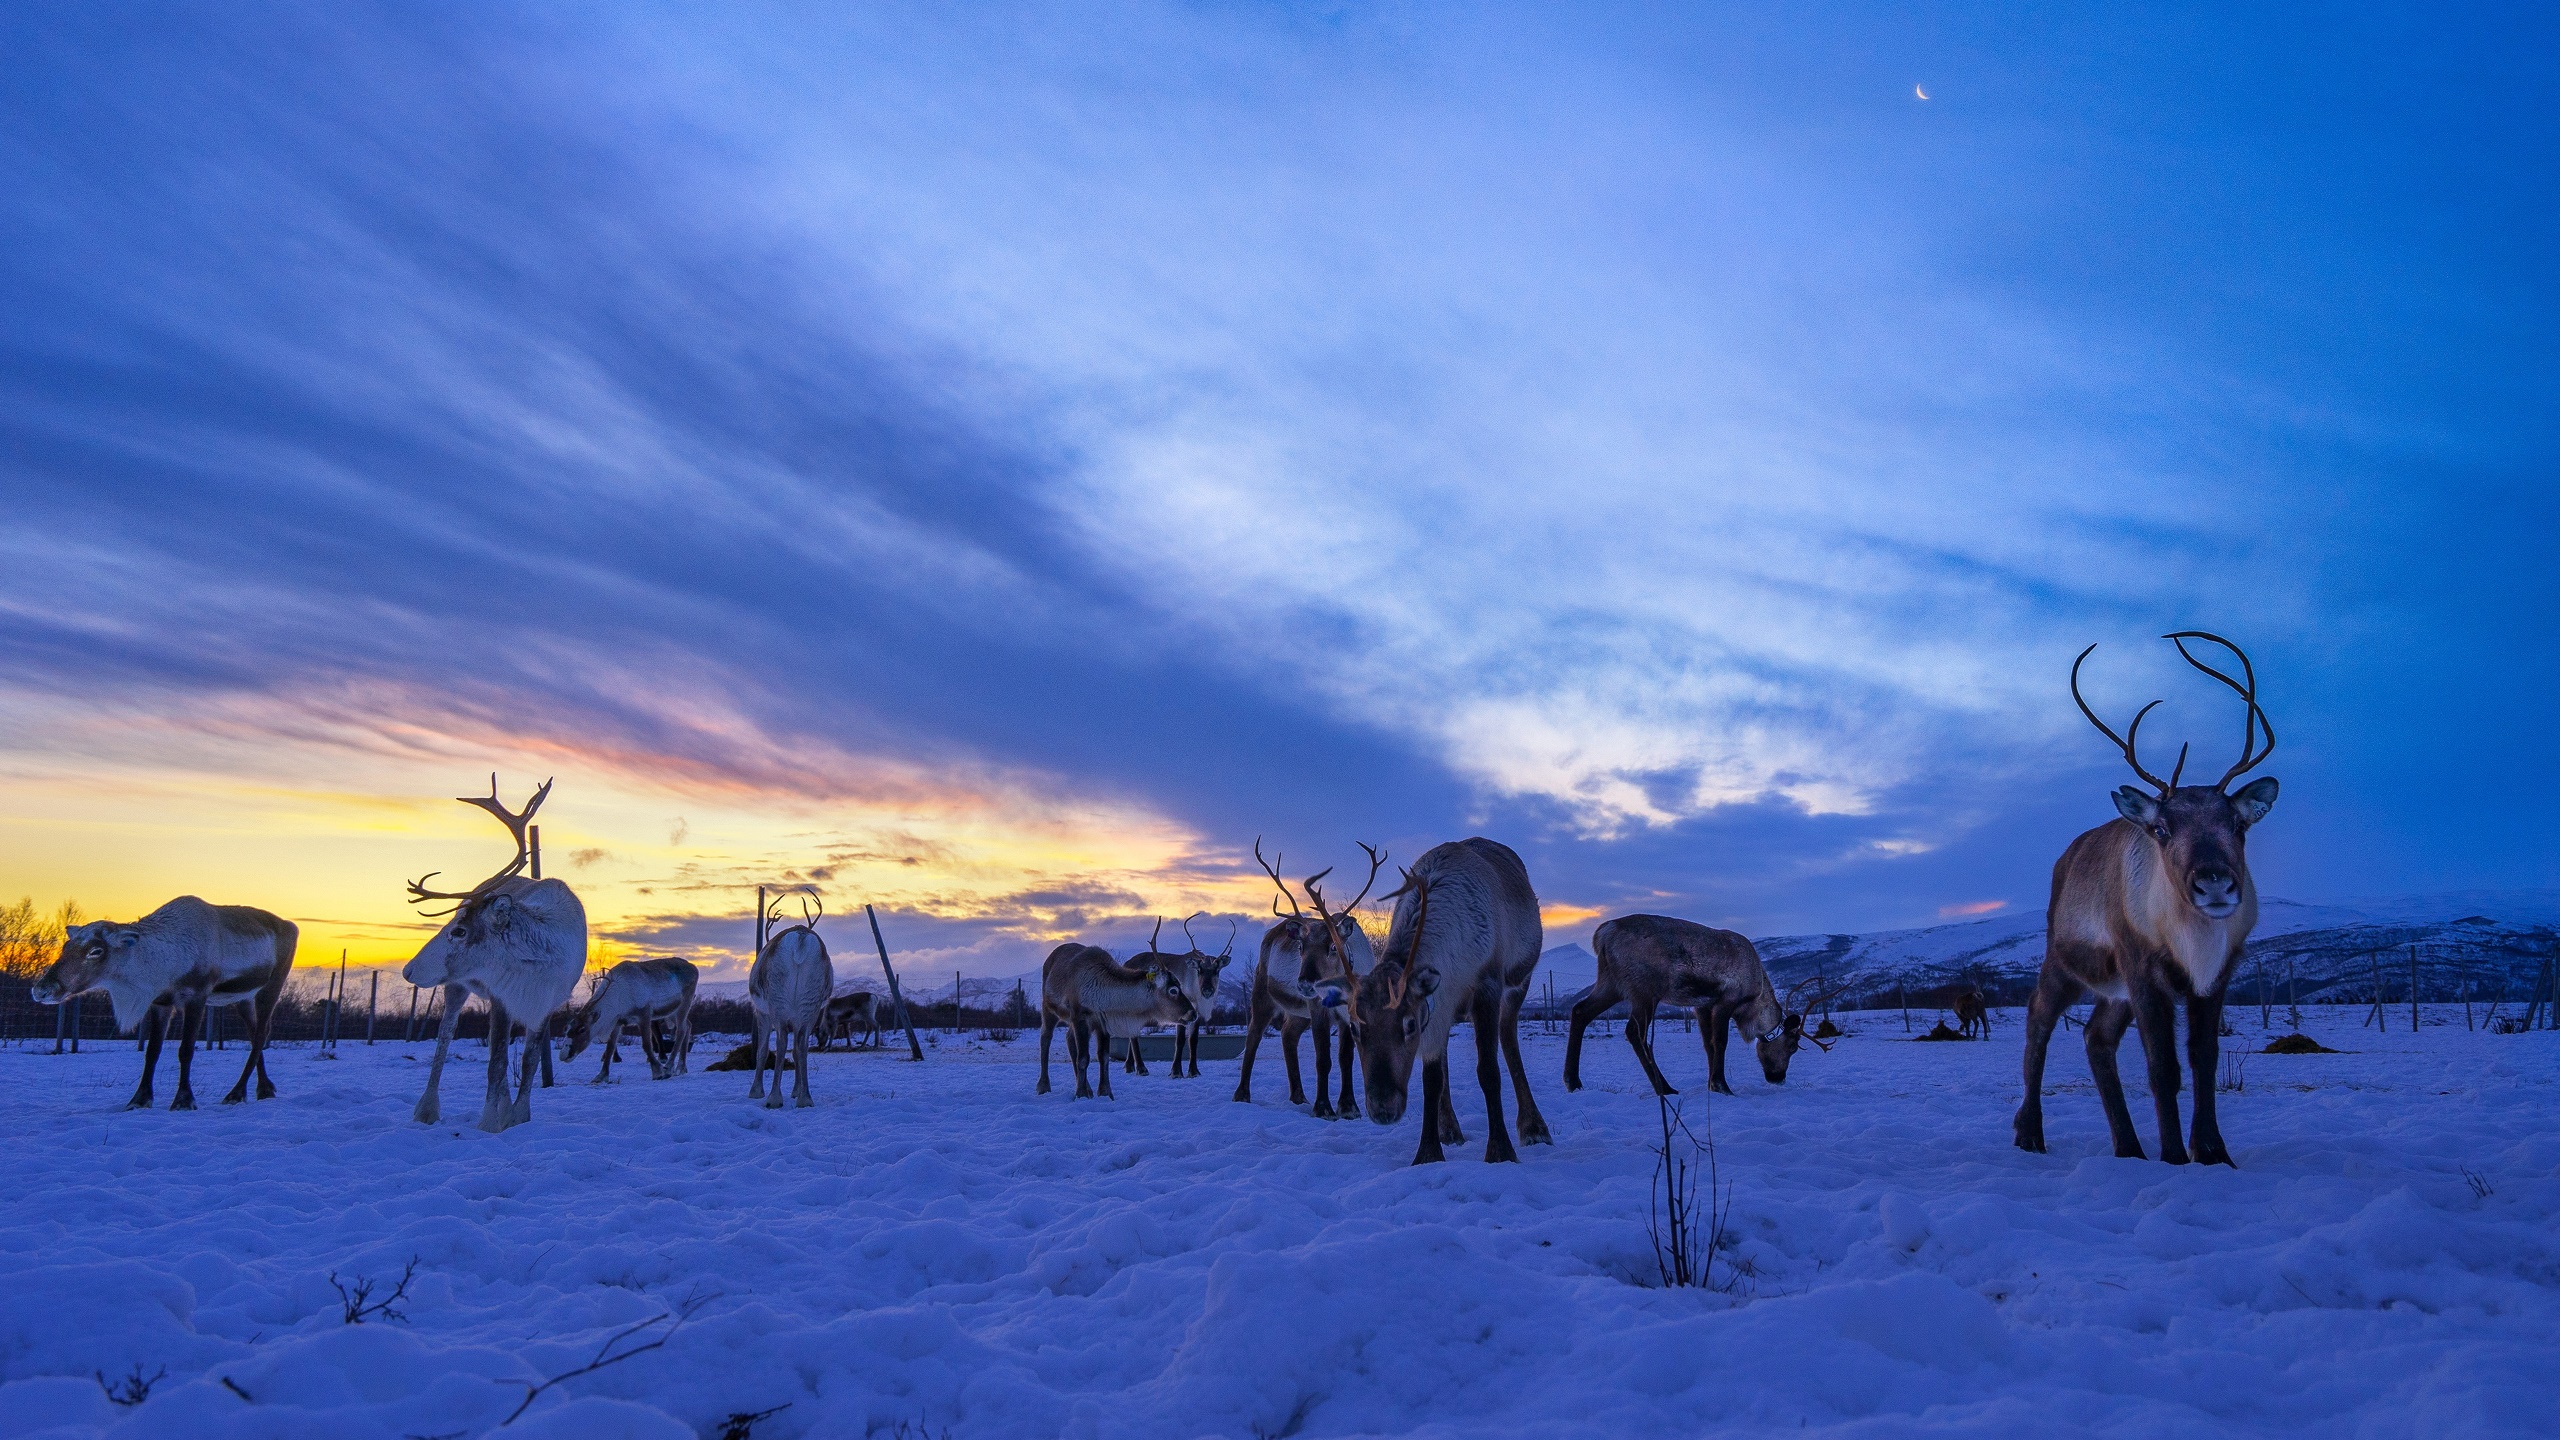 General 2560x1440 sky sunlight clouds winter cold snow animals mammals reindeer